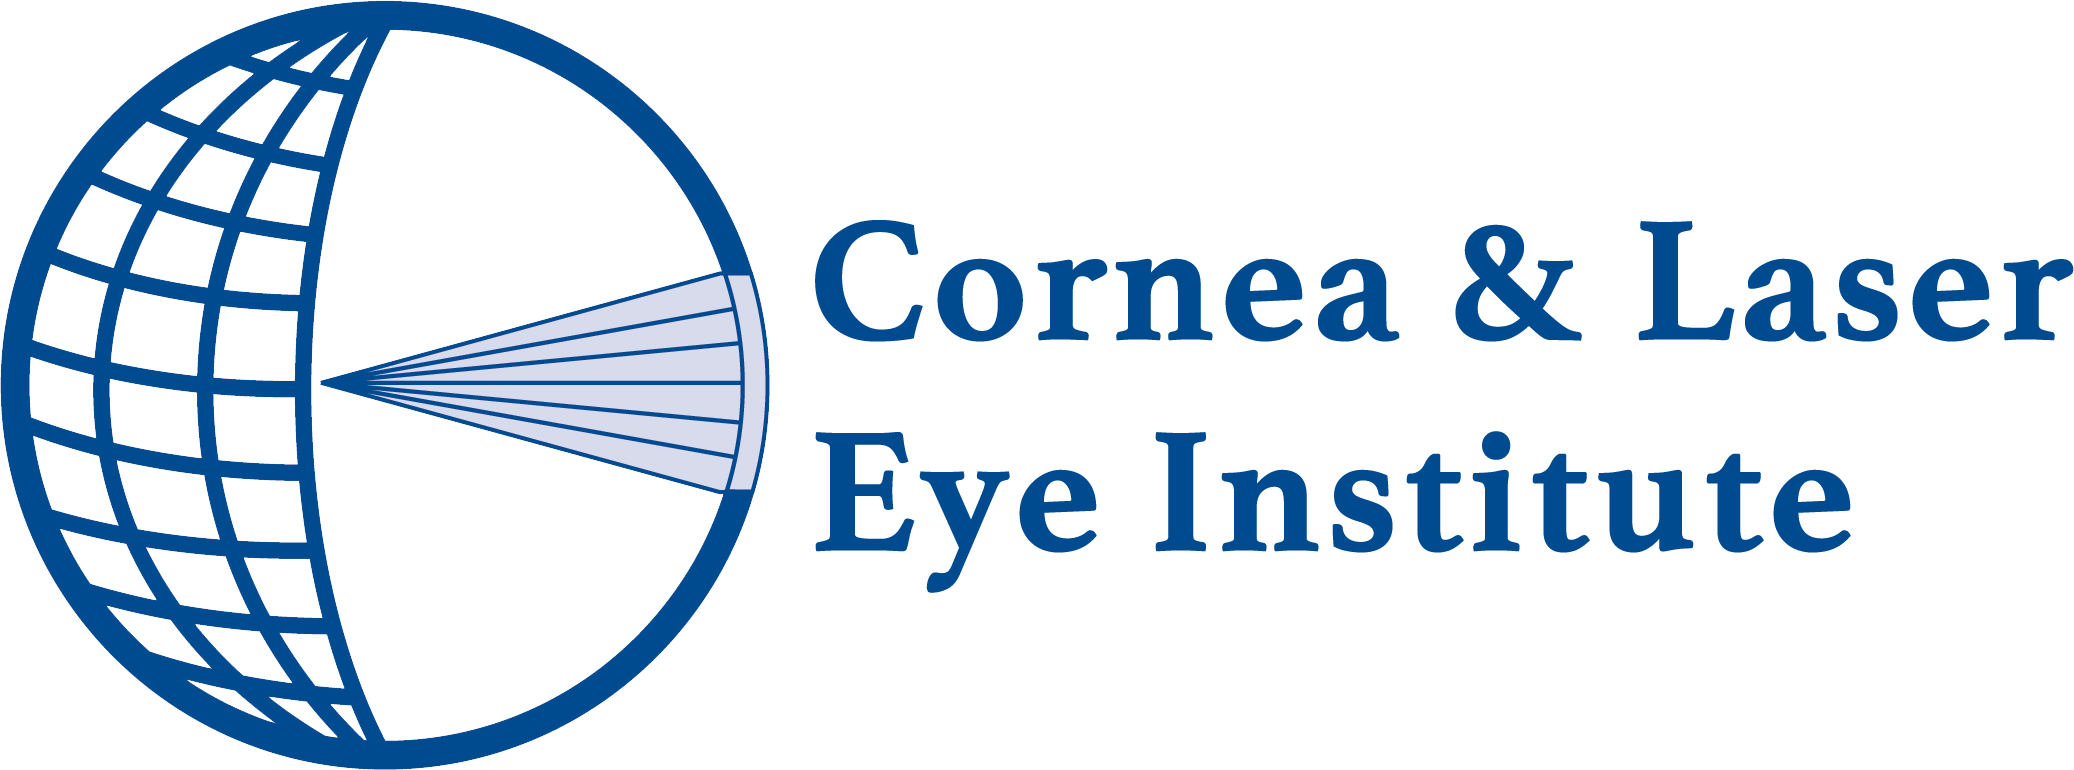 Cornea & Laser Eye Institute